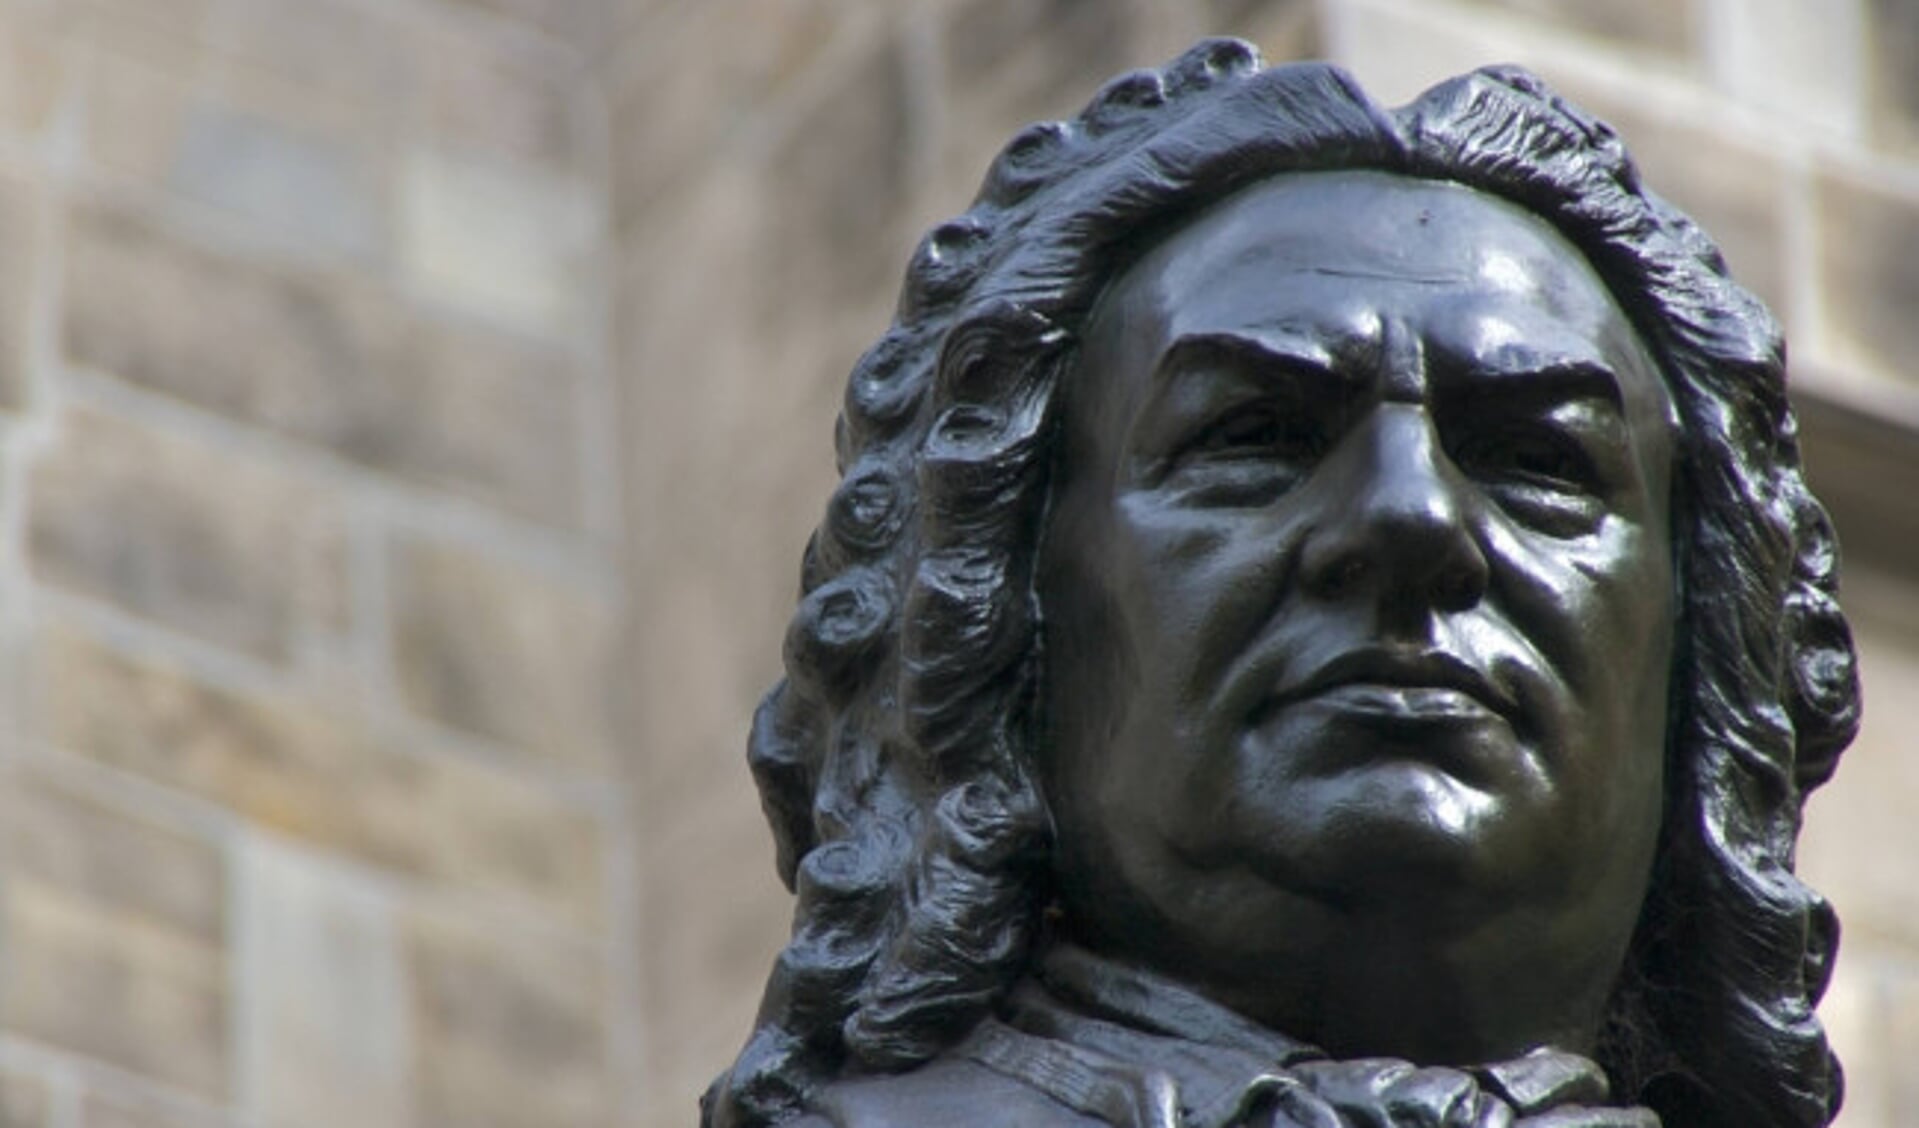 Deel van het standbeeld van Johann Sebastian Bach voor de Thomaskirche in Leipzig waar Bach cantor-organist was.